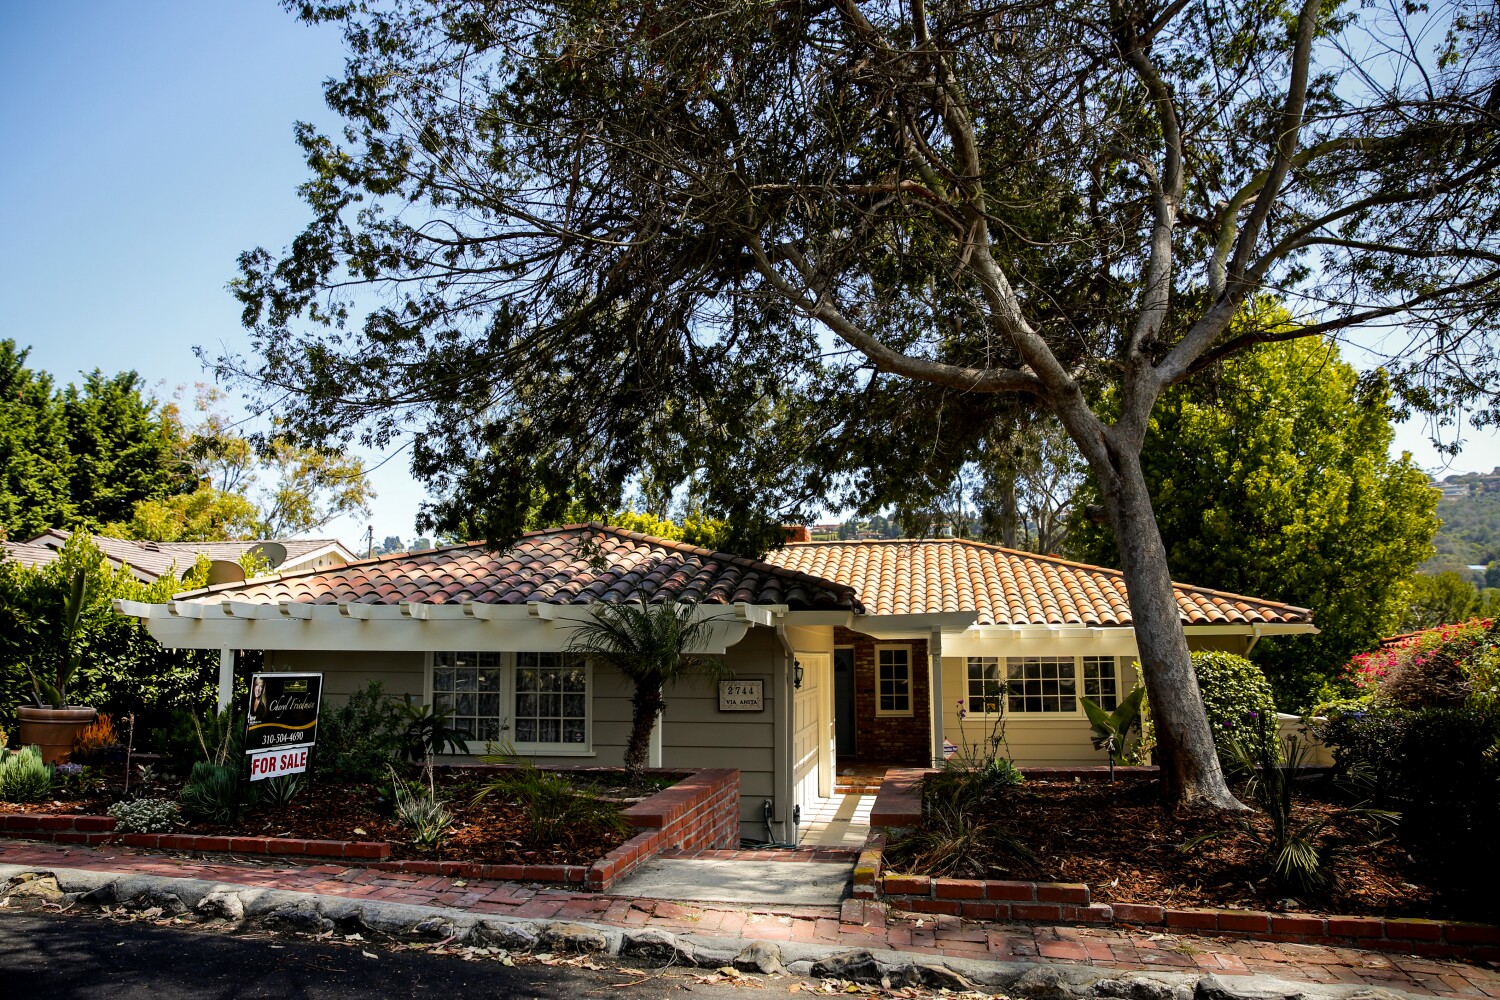 'Upzoning' in my backyard? California bill won't turbocharge home building, study says